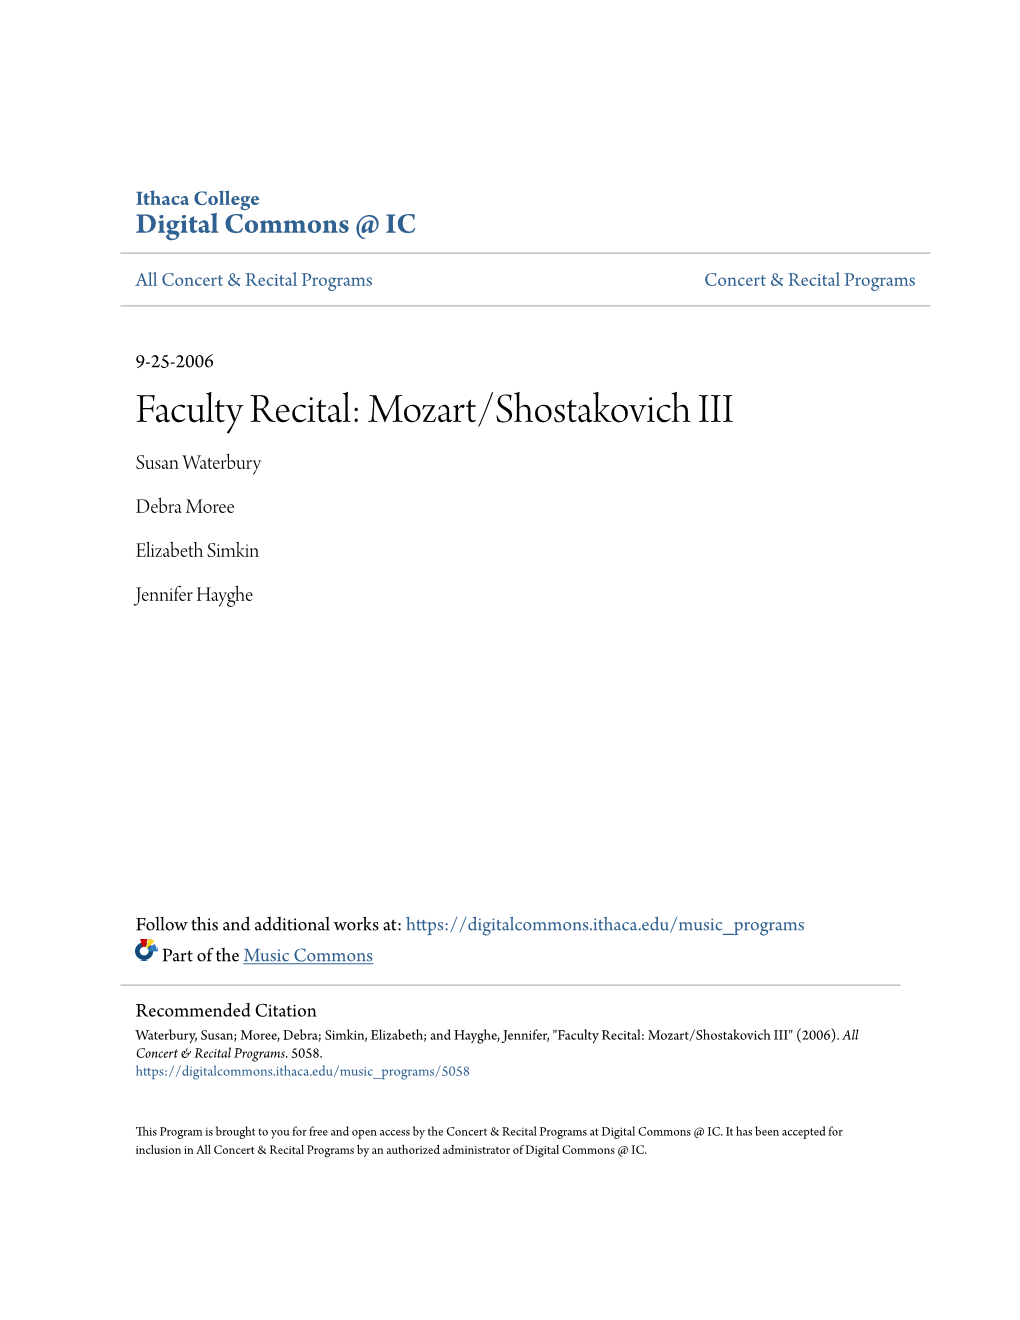 Faculty Recital: Mozart/Shostakovich III Susan Waterbury